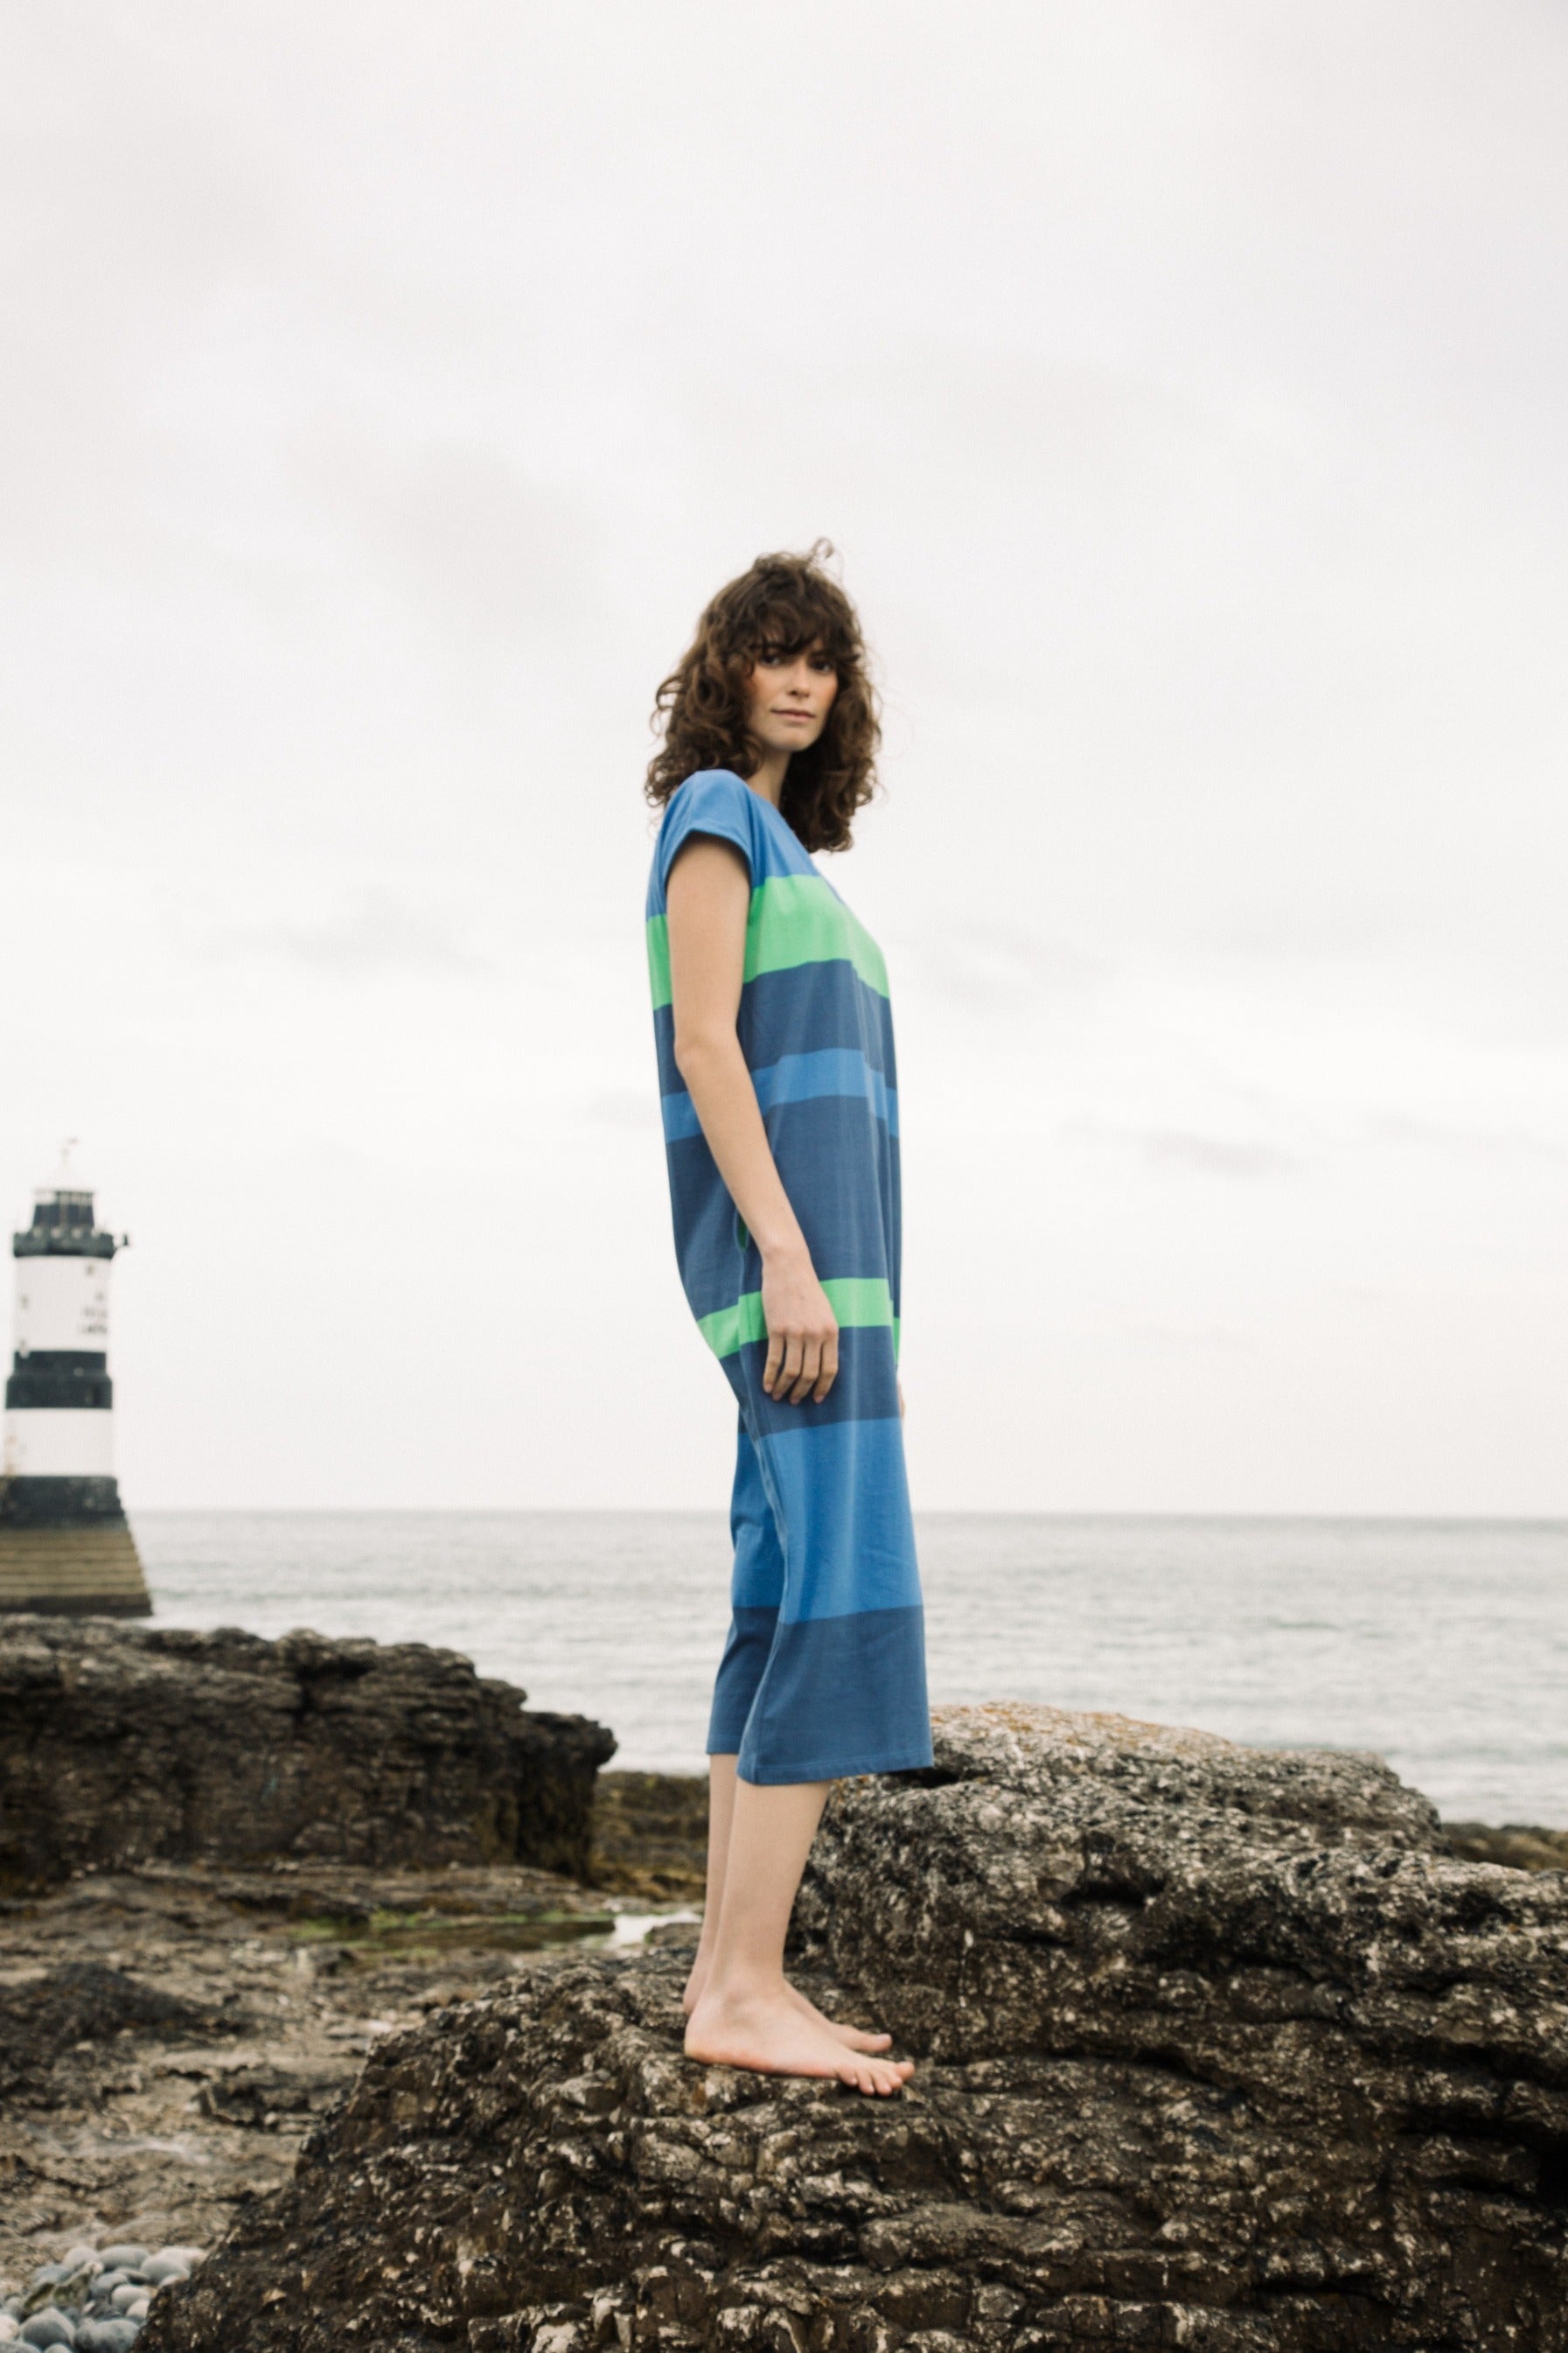 Dana-jo Organic Cotton Dress in Cornflower Multi Stripe